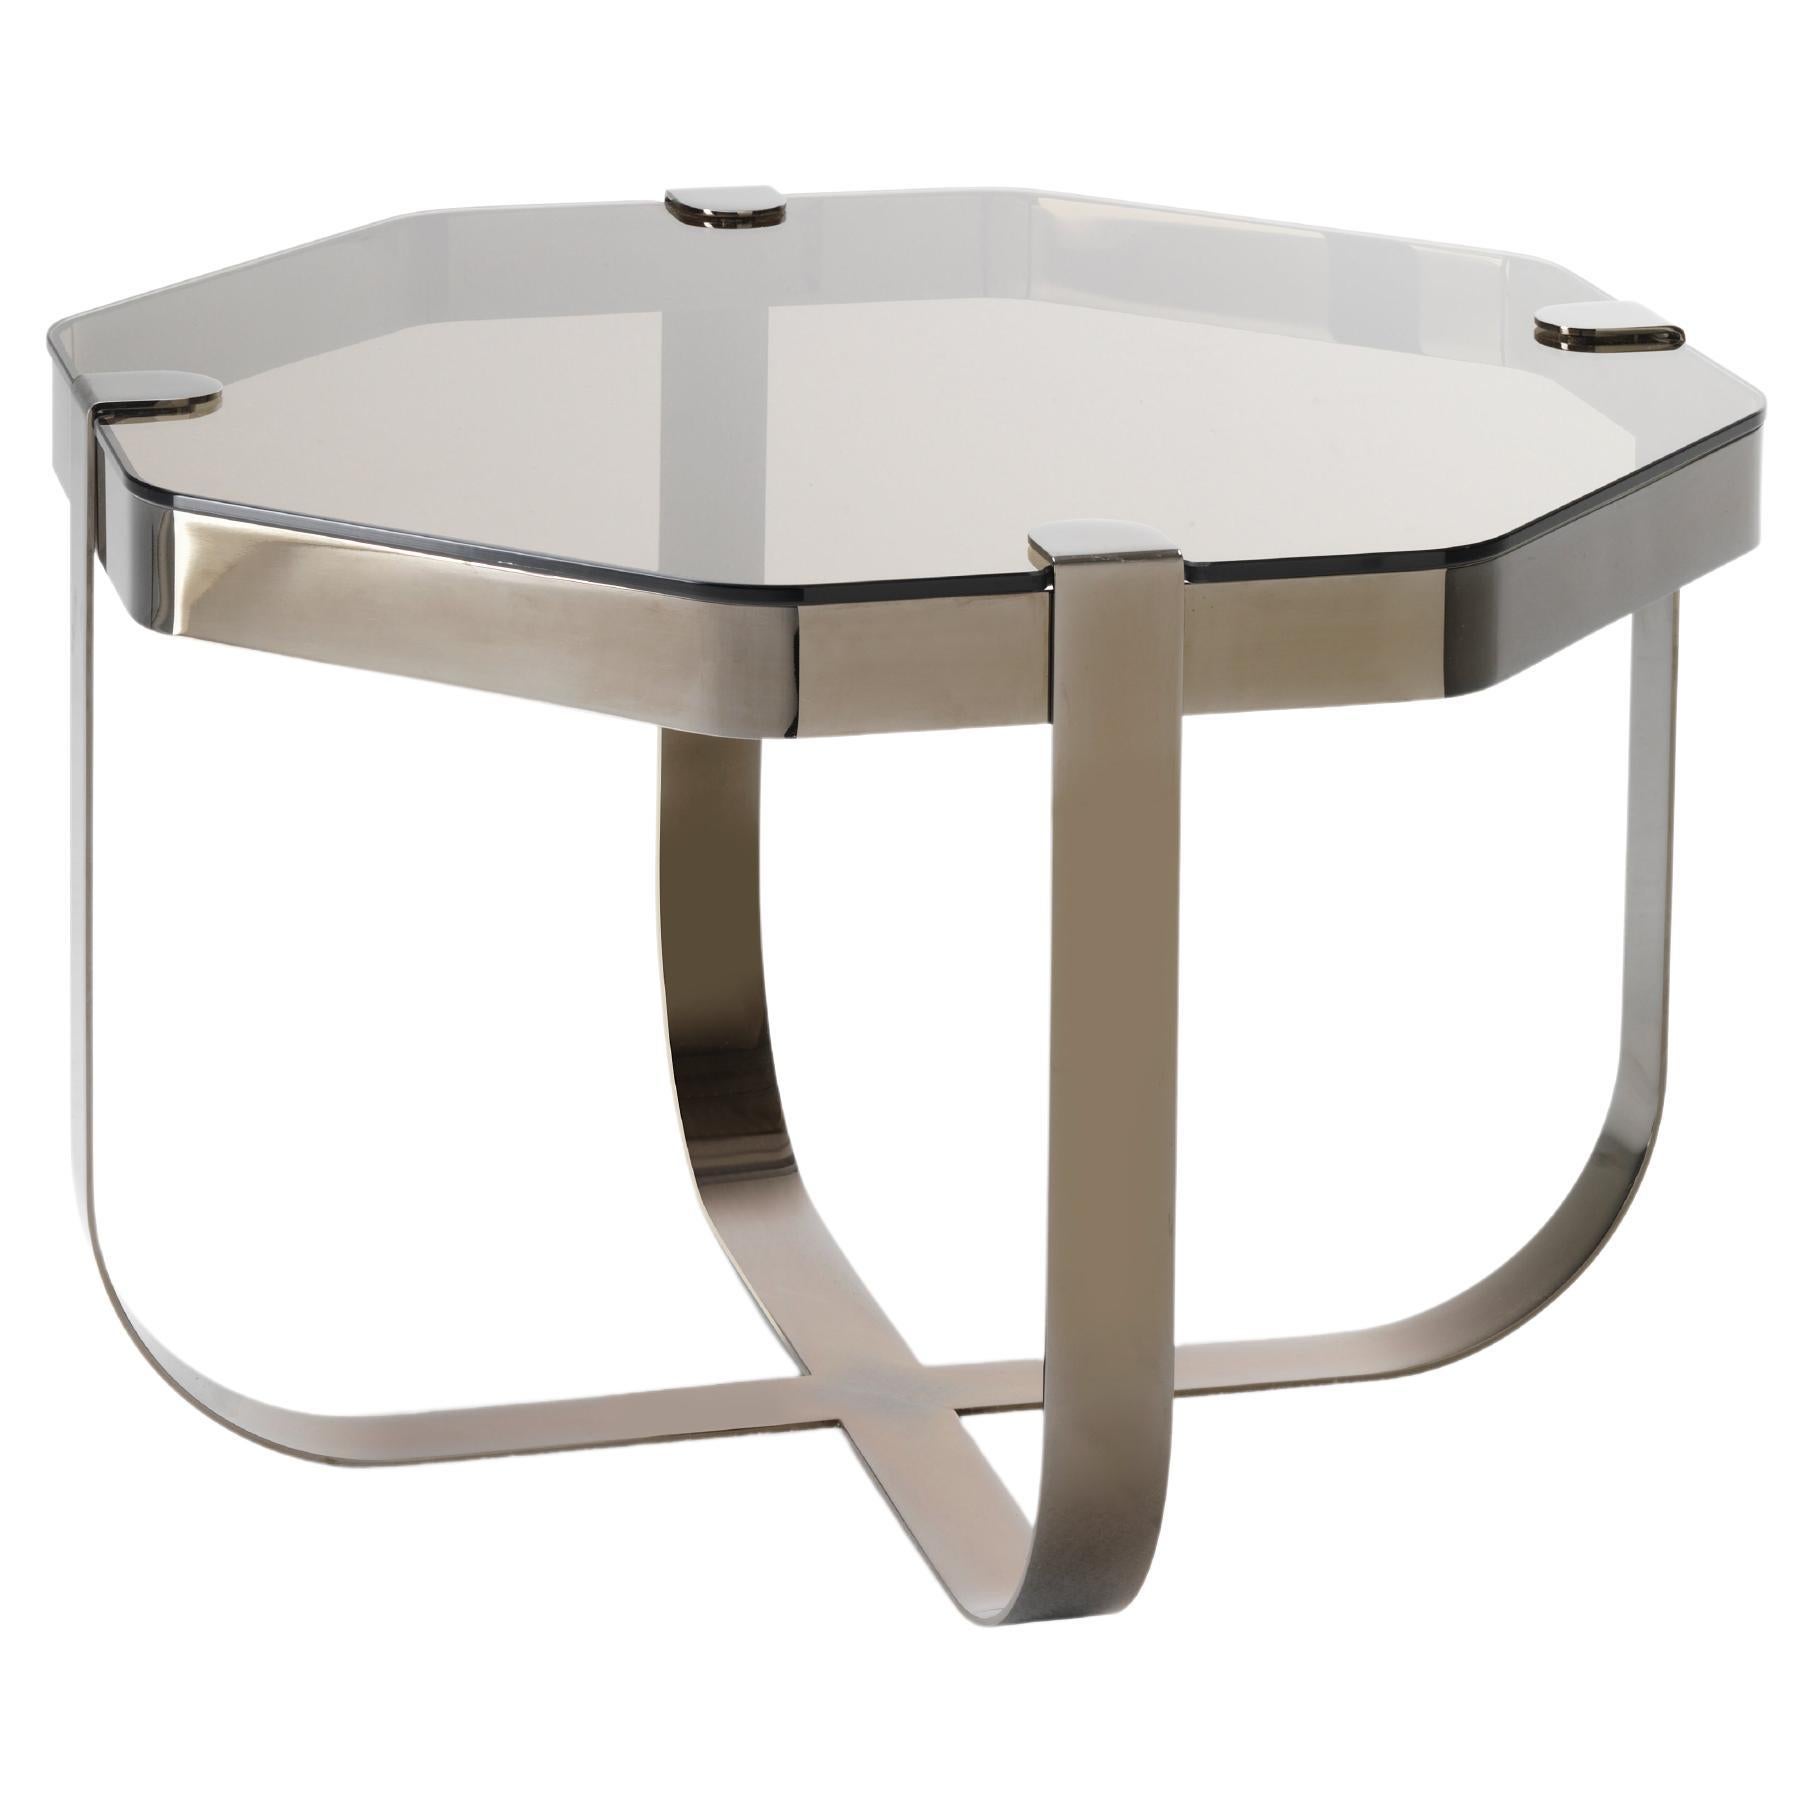 Ring Octagonal Coffee Table in Nickel Frame & Bronze Top by Serena Confalonieri